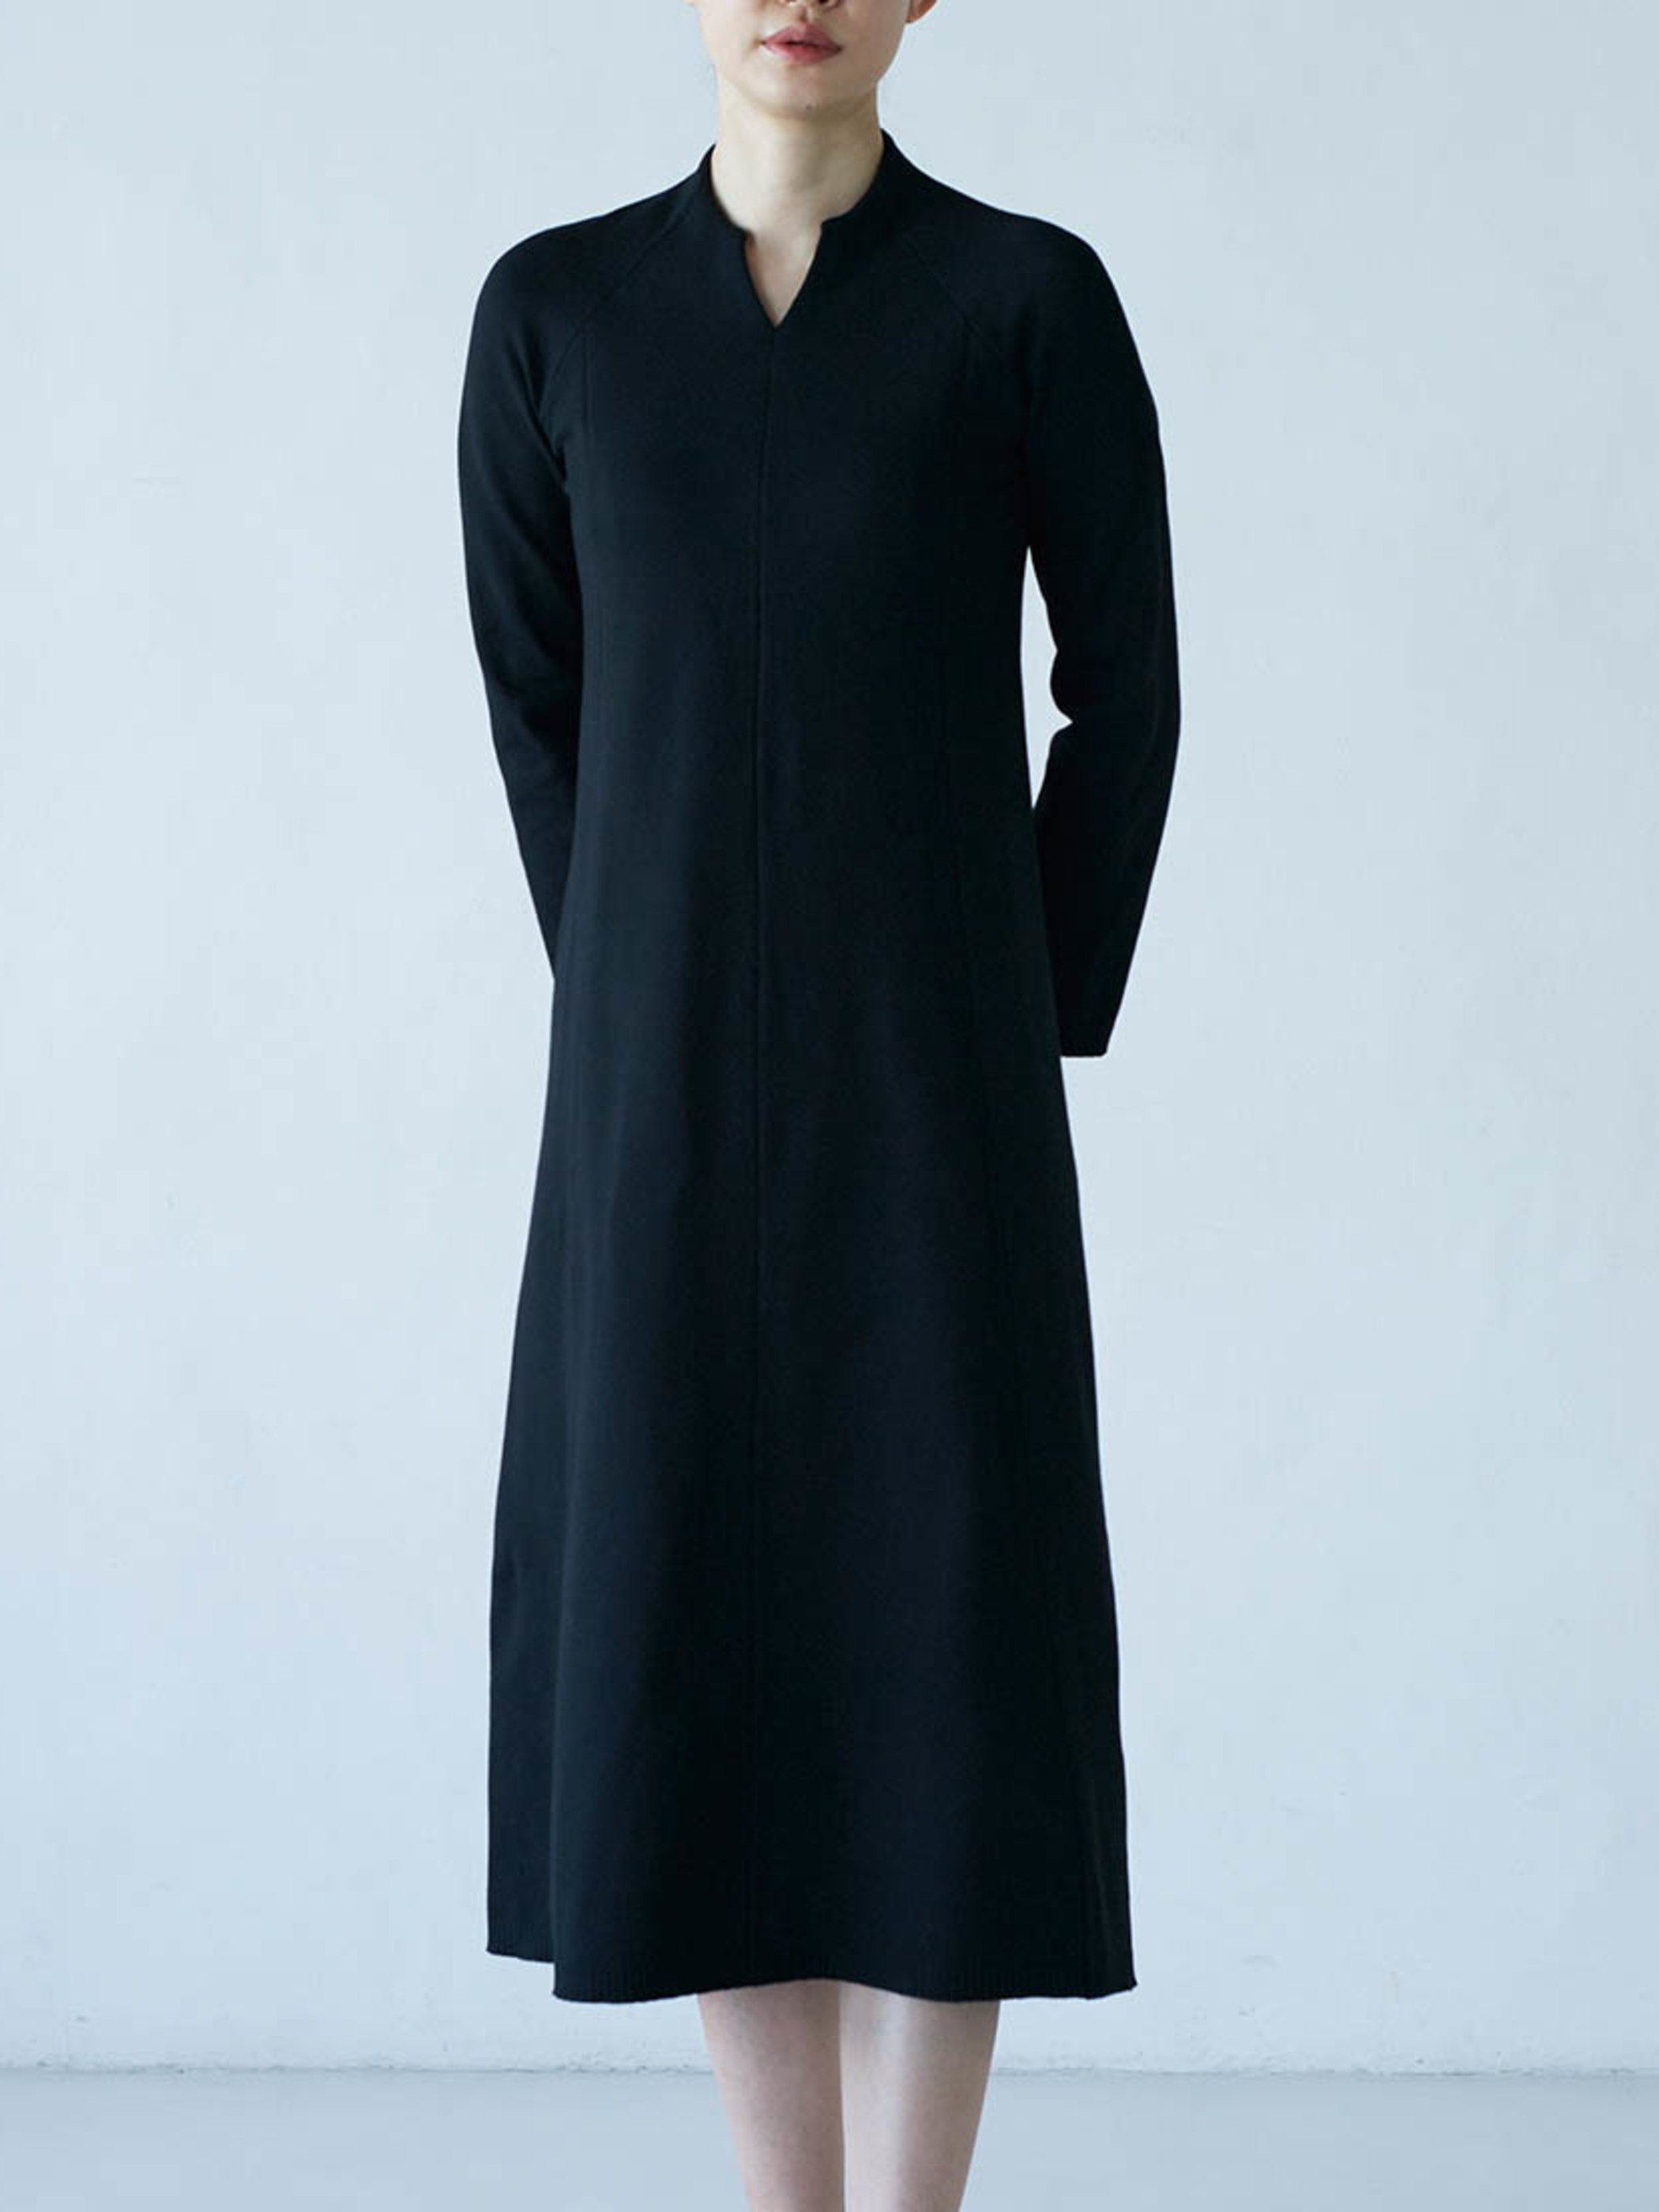 Work Wear collection Women's Dress Black(ワンピース・ブラック)